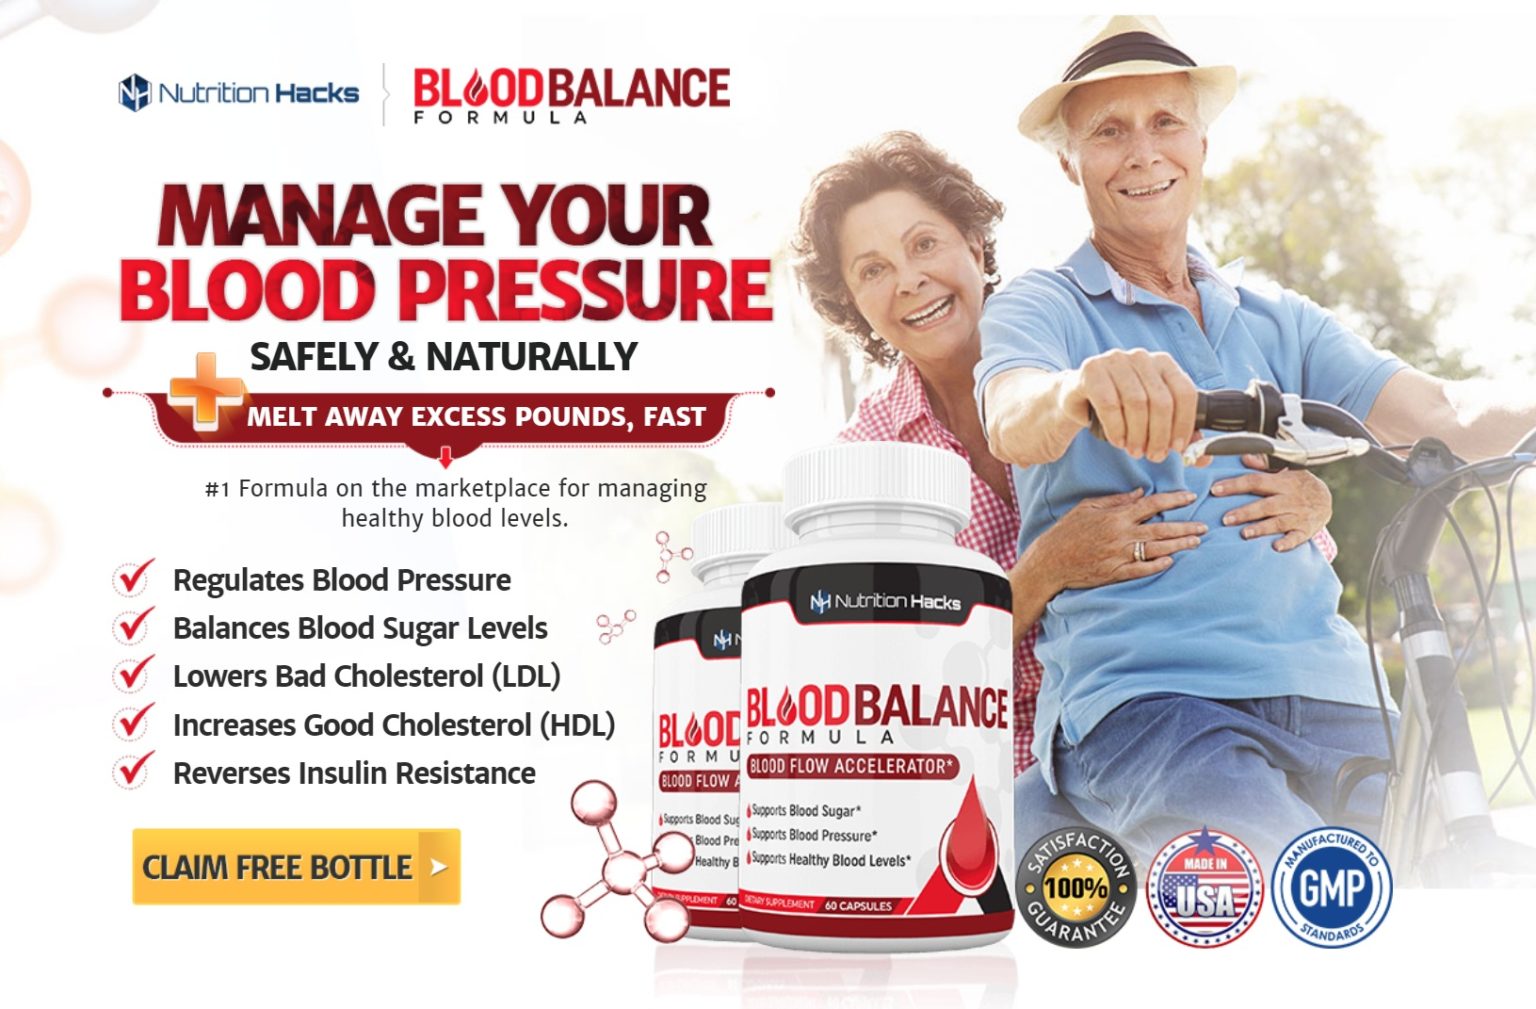 Why Use Nutrition Hacks Blood Balance Formula? 